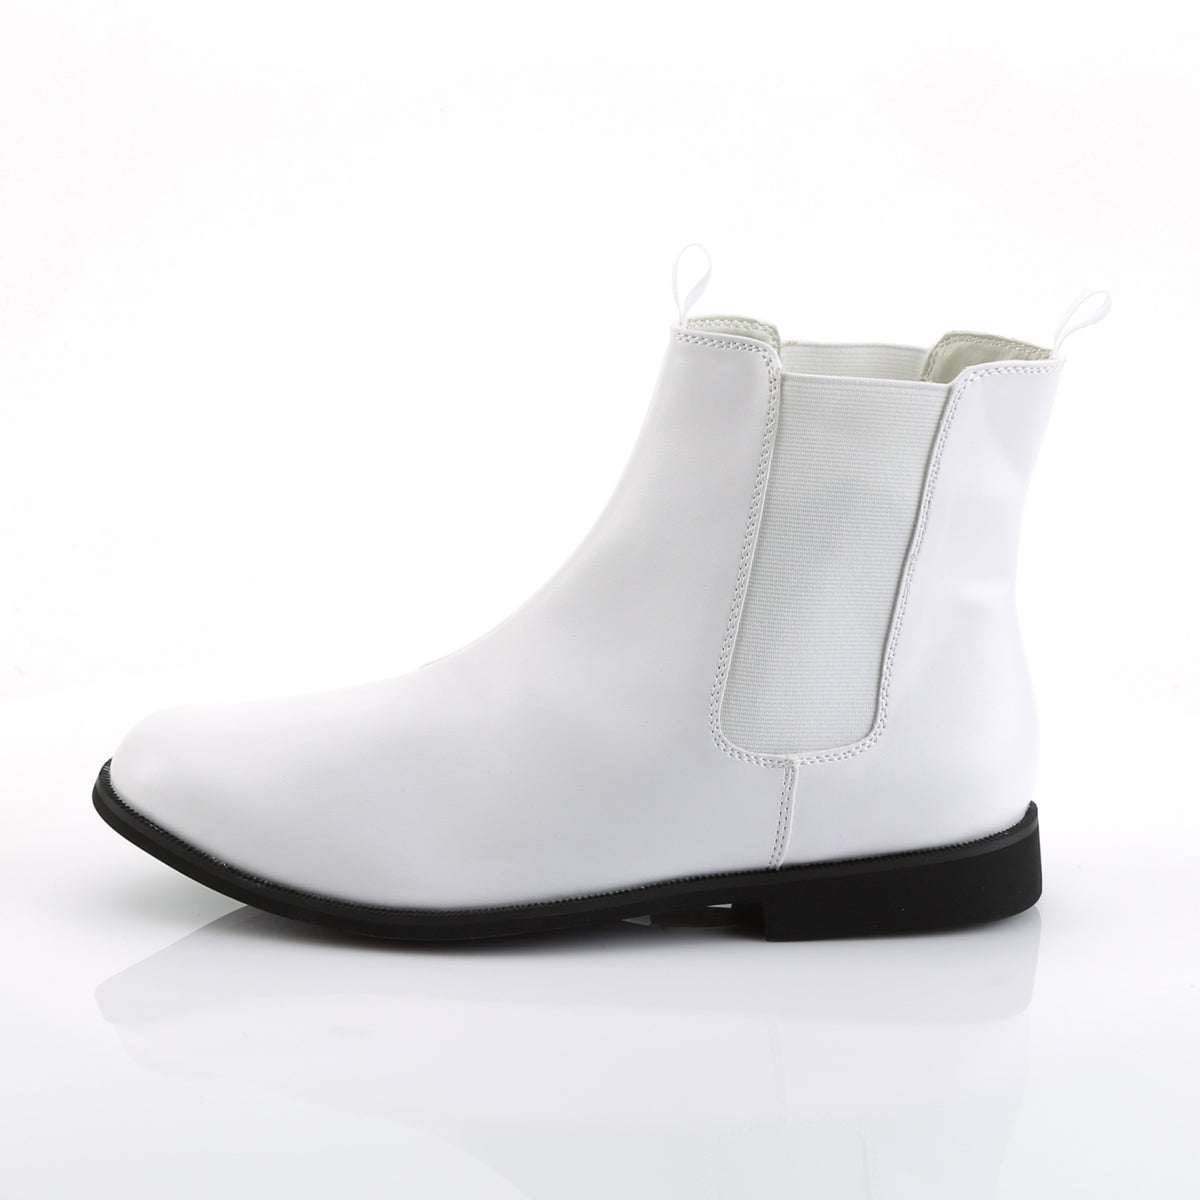 TROOPER-12 Fancy Dress Costume Funtasma Men's Boots White Pu